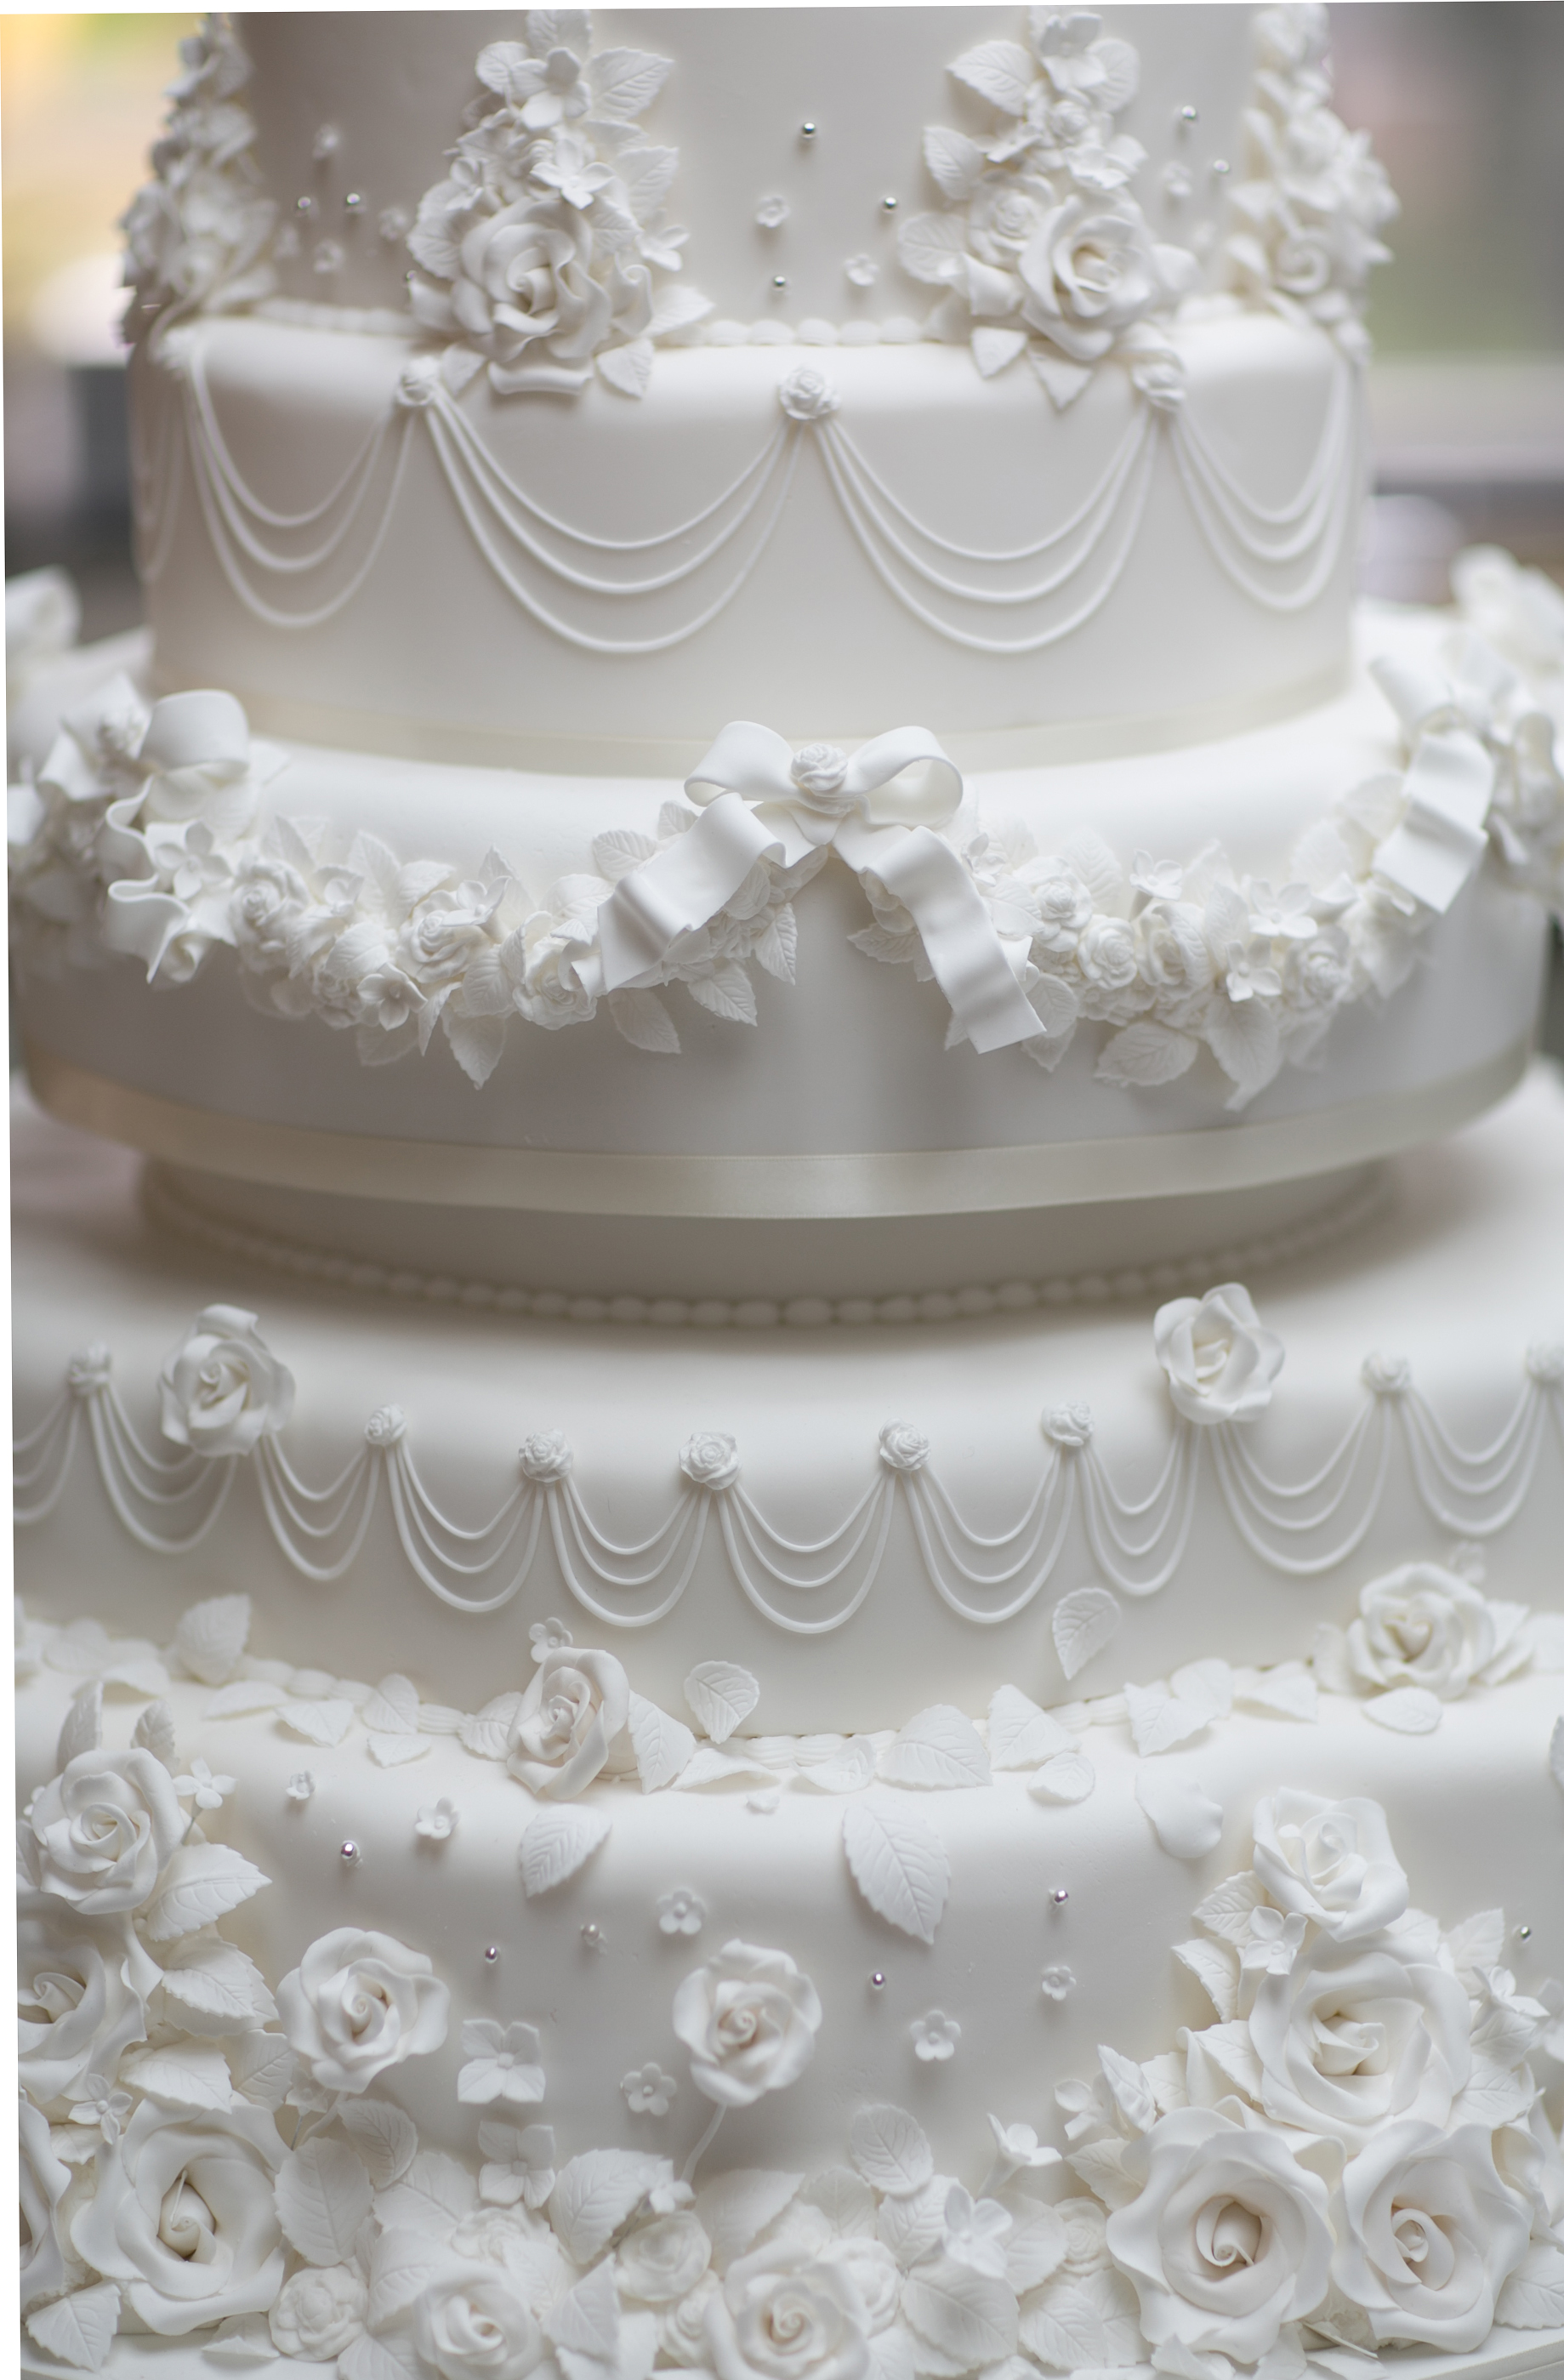 The Essex Wedding Cake!